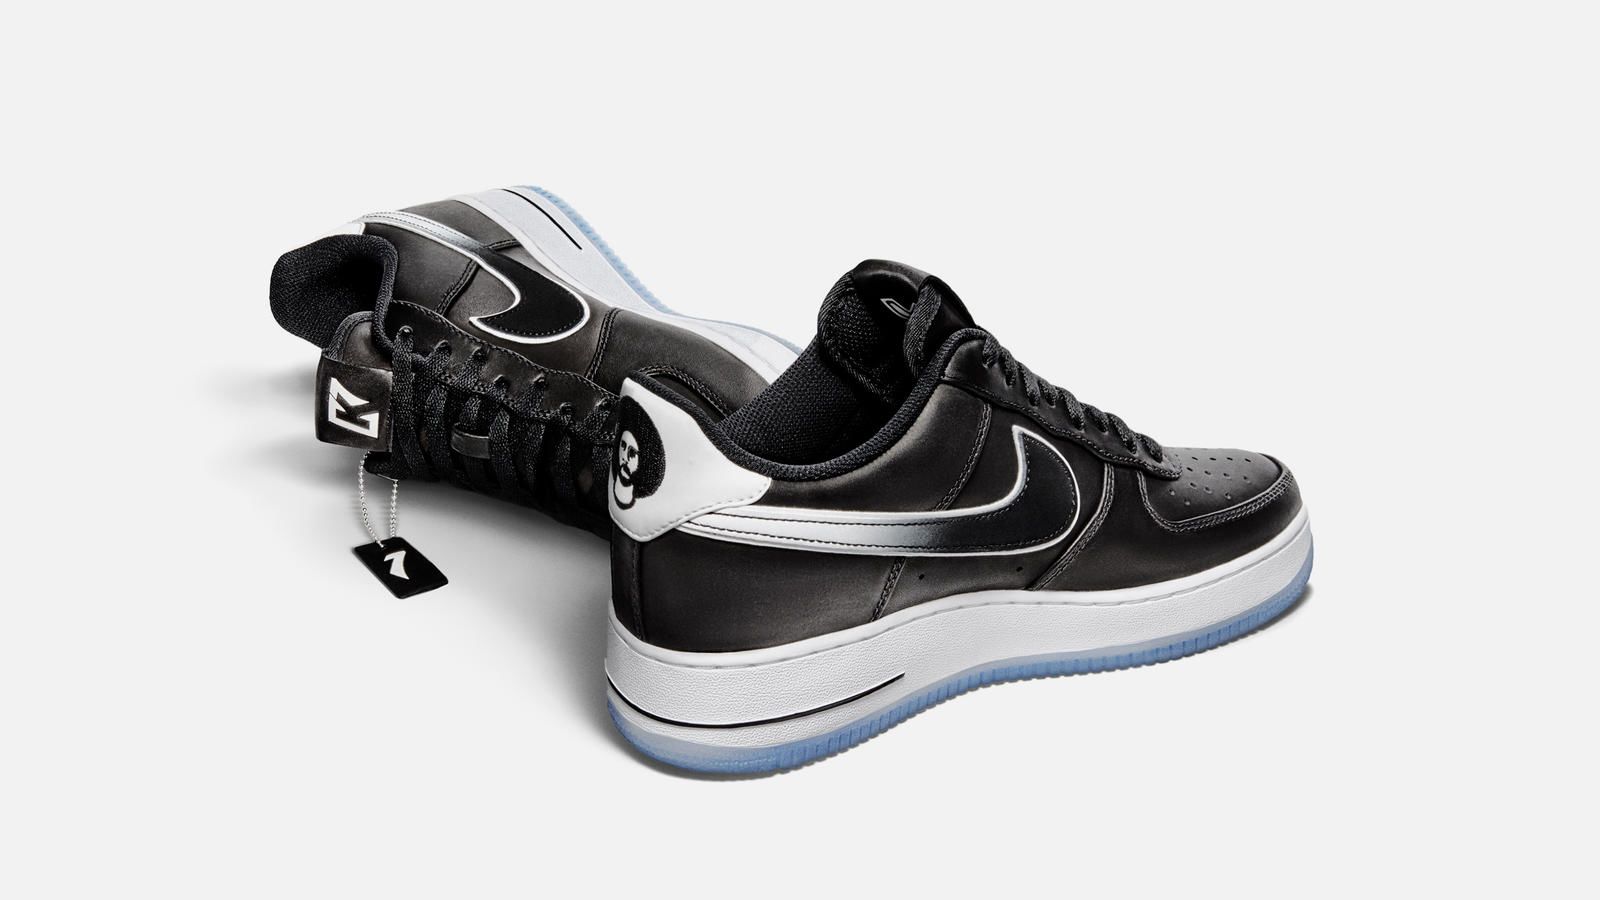 Temporizador Prisionero Extracción Nike Colin Kaepernick Air Force 1 sneaker sells out online | CNN Business